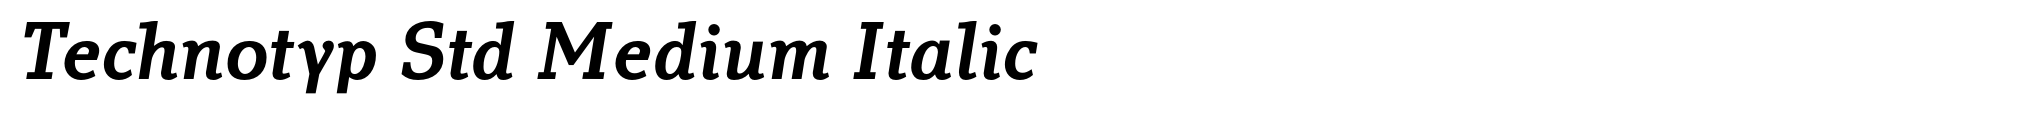 Technotyp Std Medium Italic image